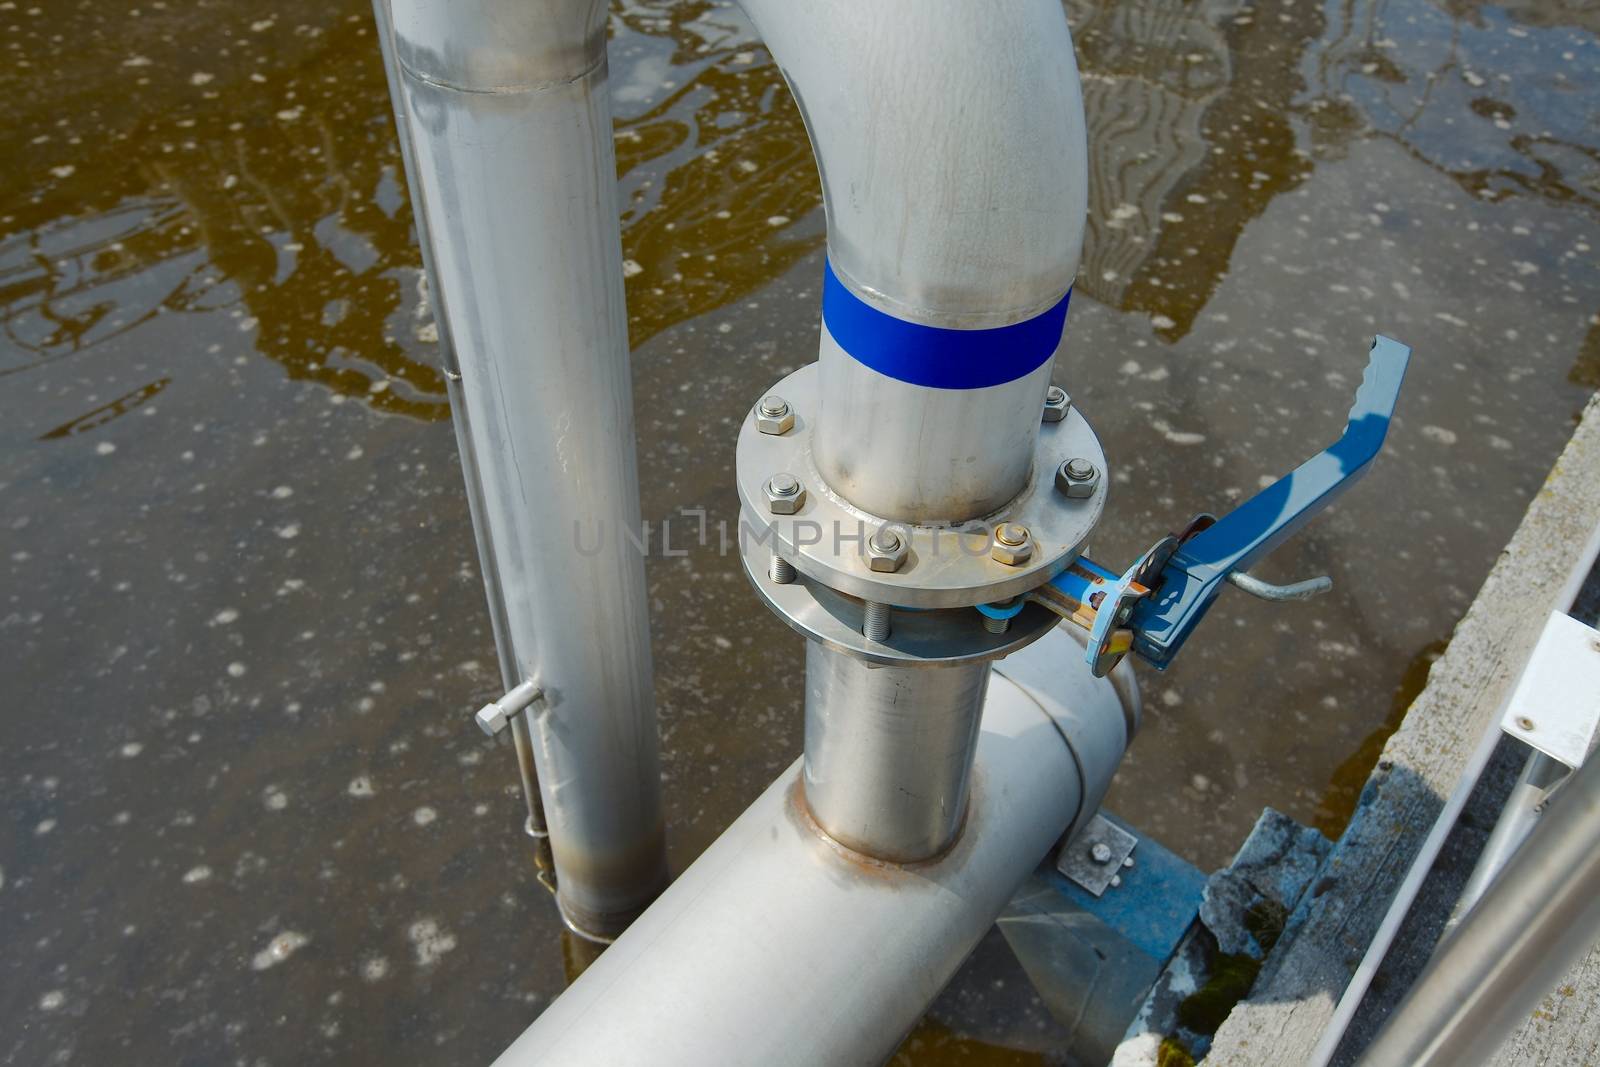 Wastewater treatment plant aerating basin